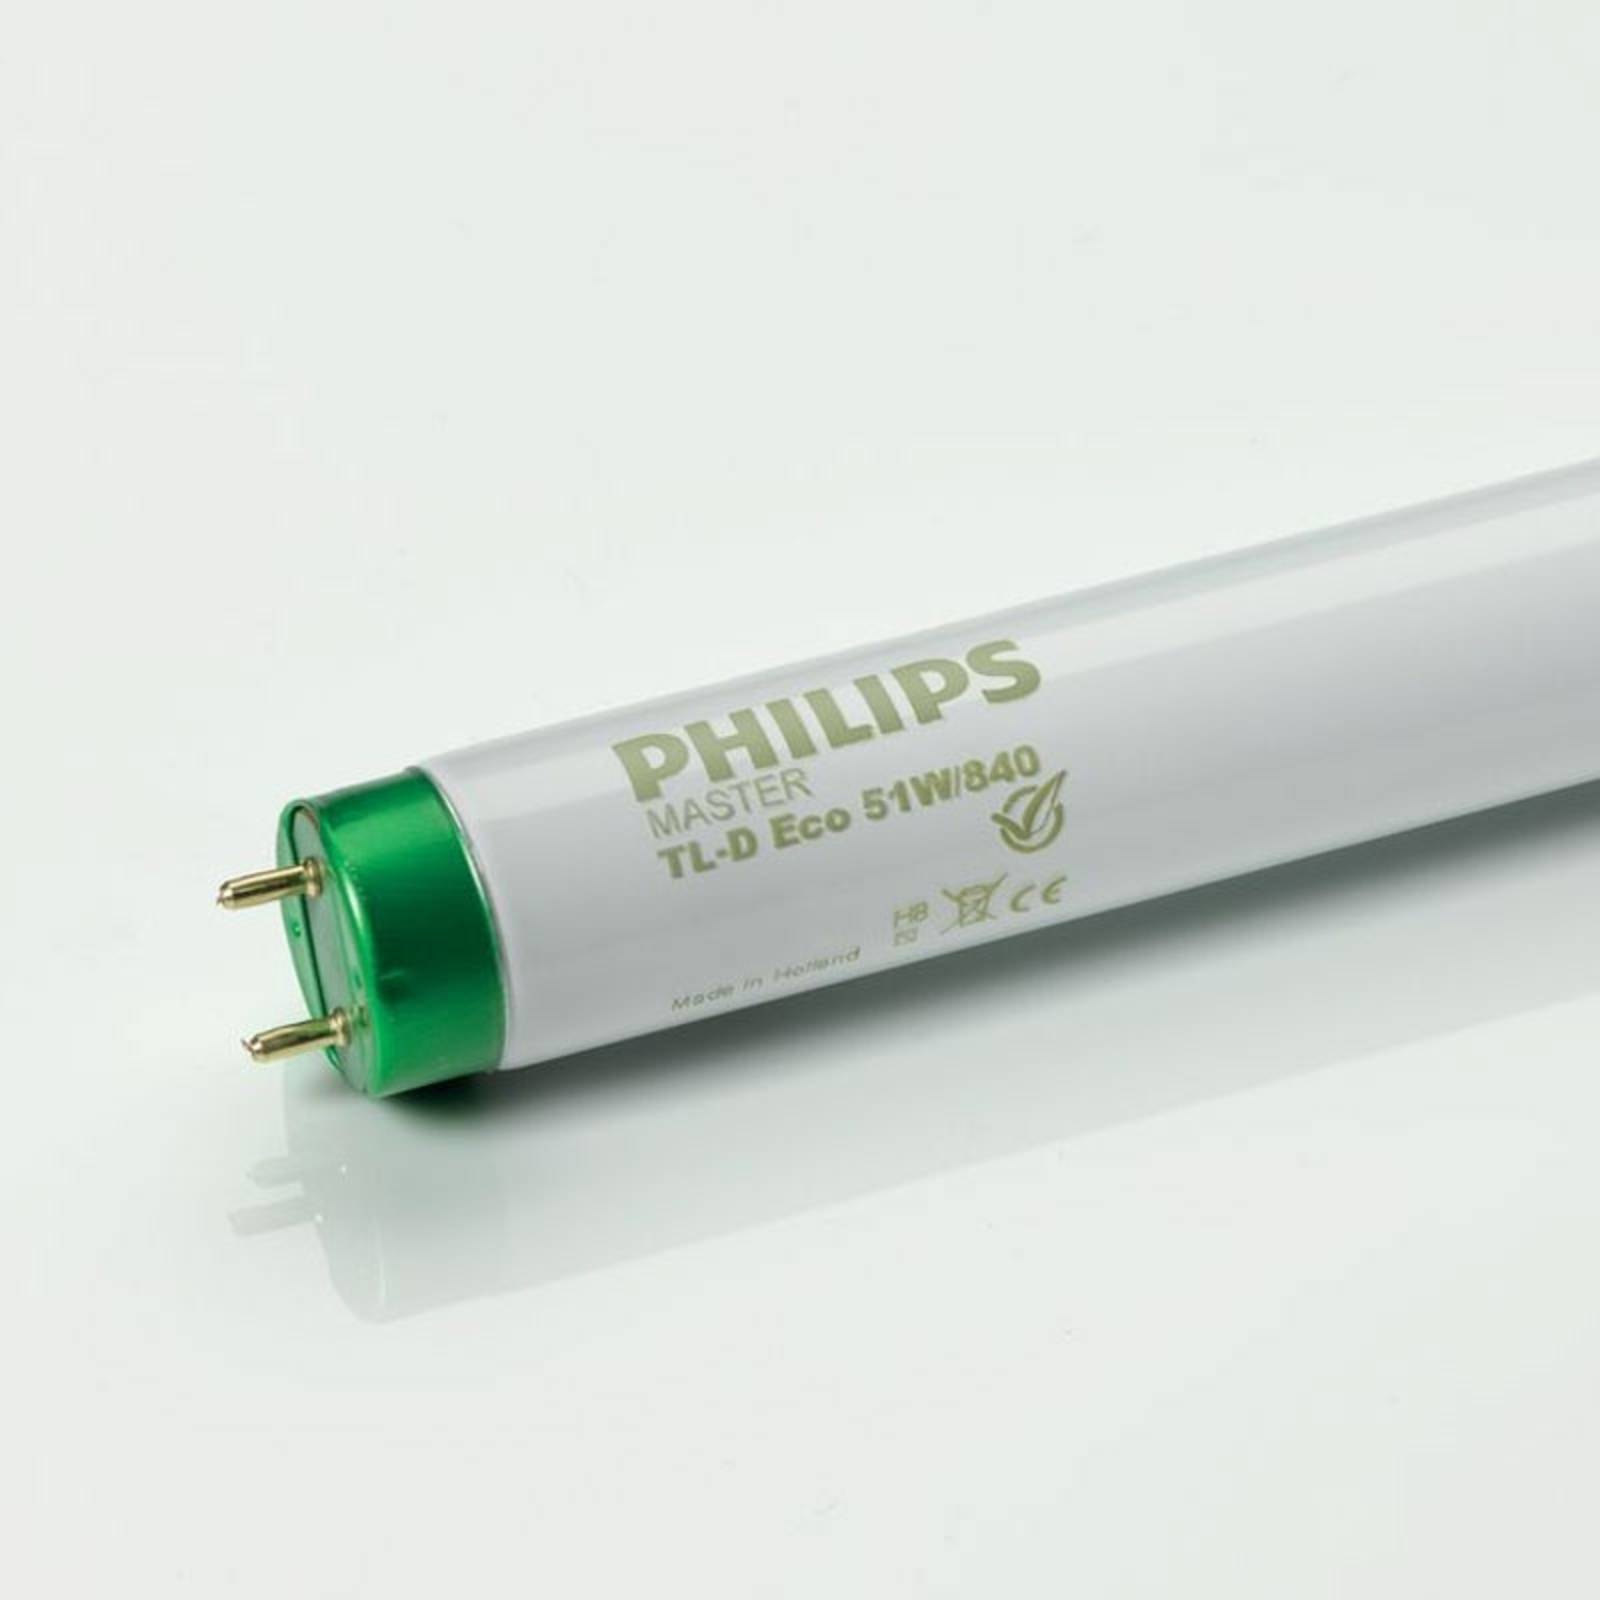 Philips Zářivka G13 T8 Master TL-D Eco 830 32W